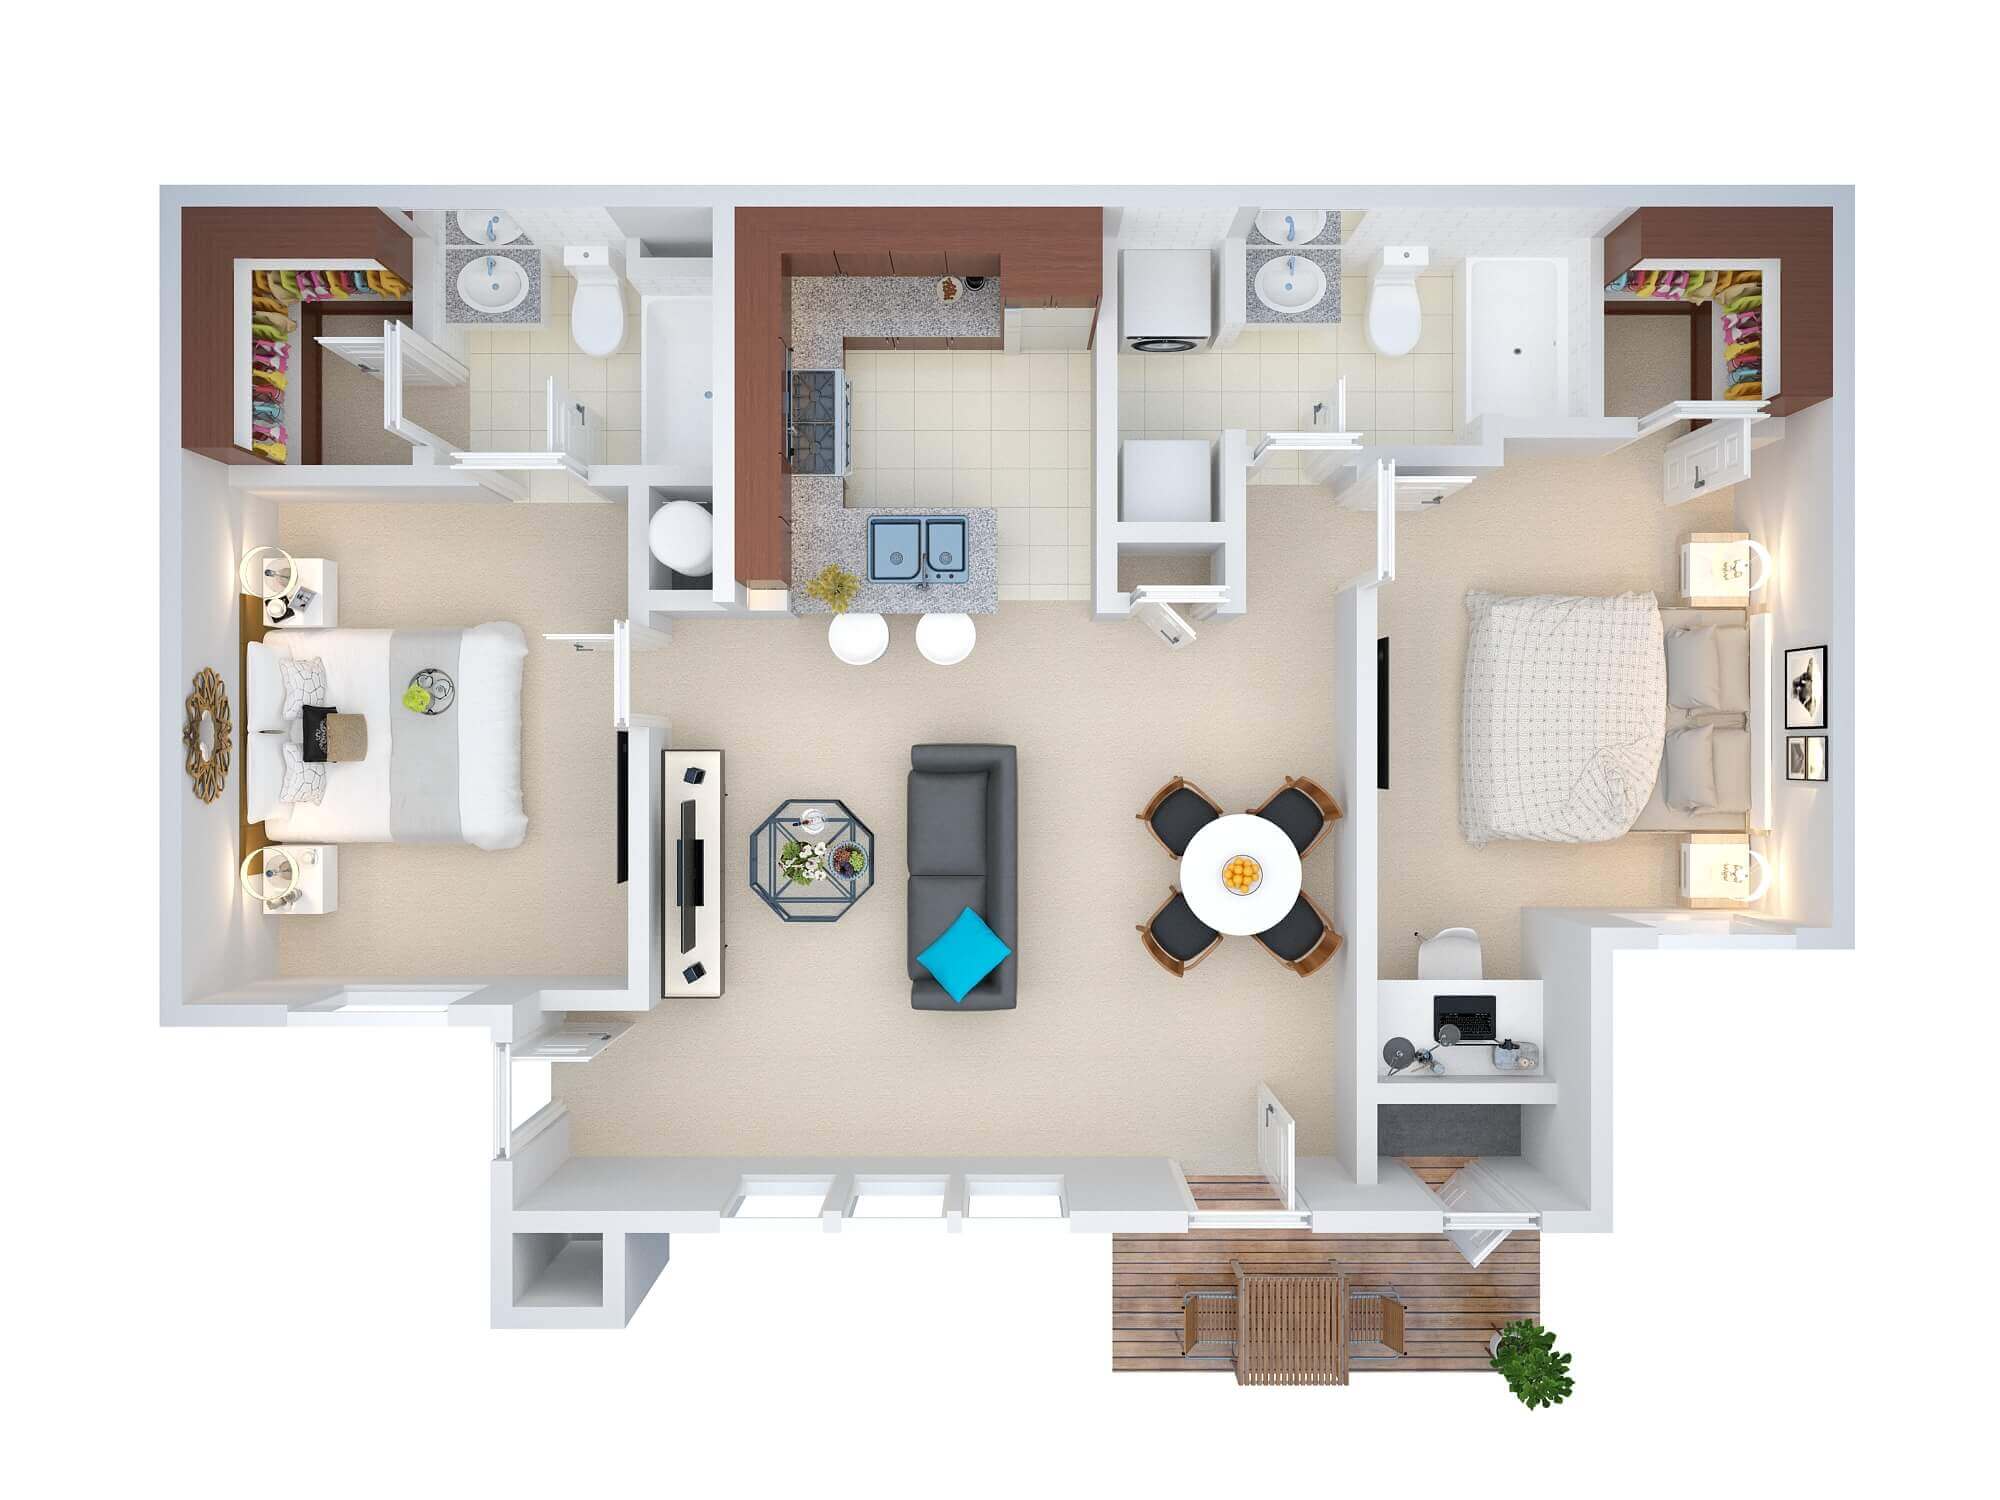 Real Estate 3D Floor Plans – Design / Rendering – Samples / Examples